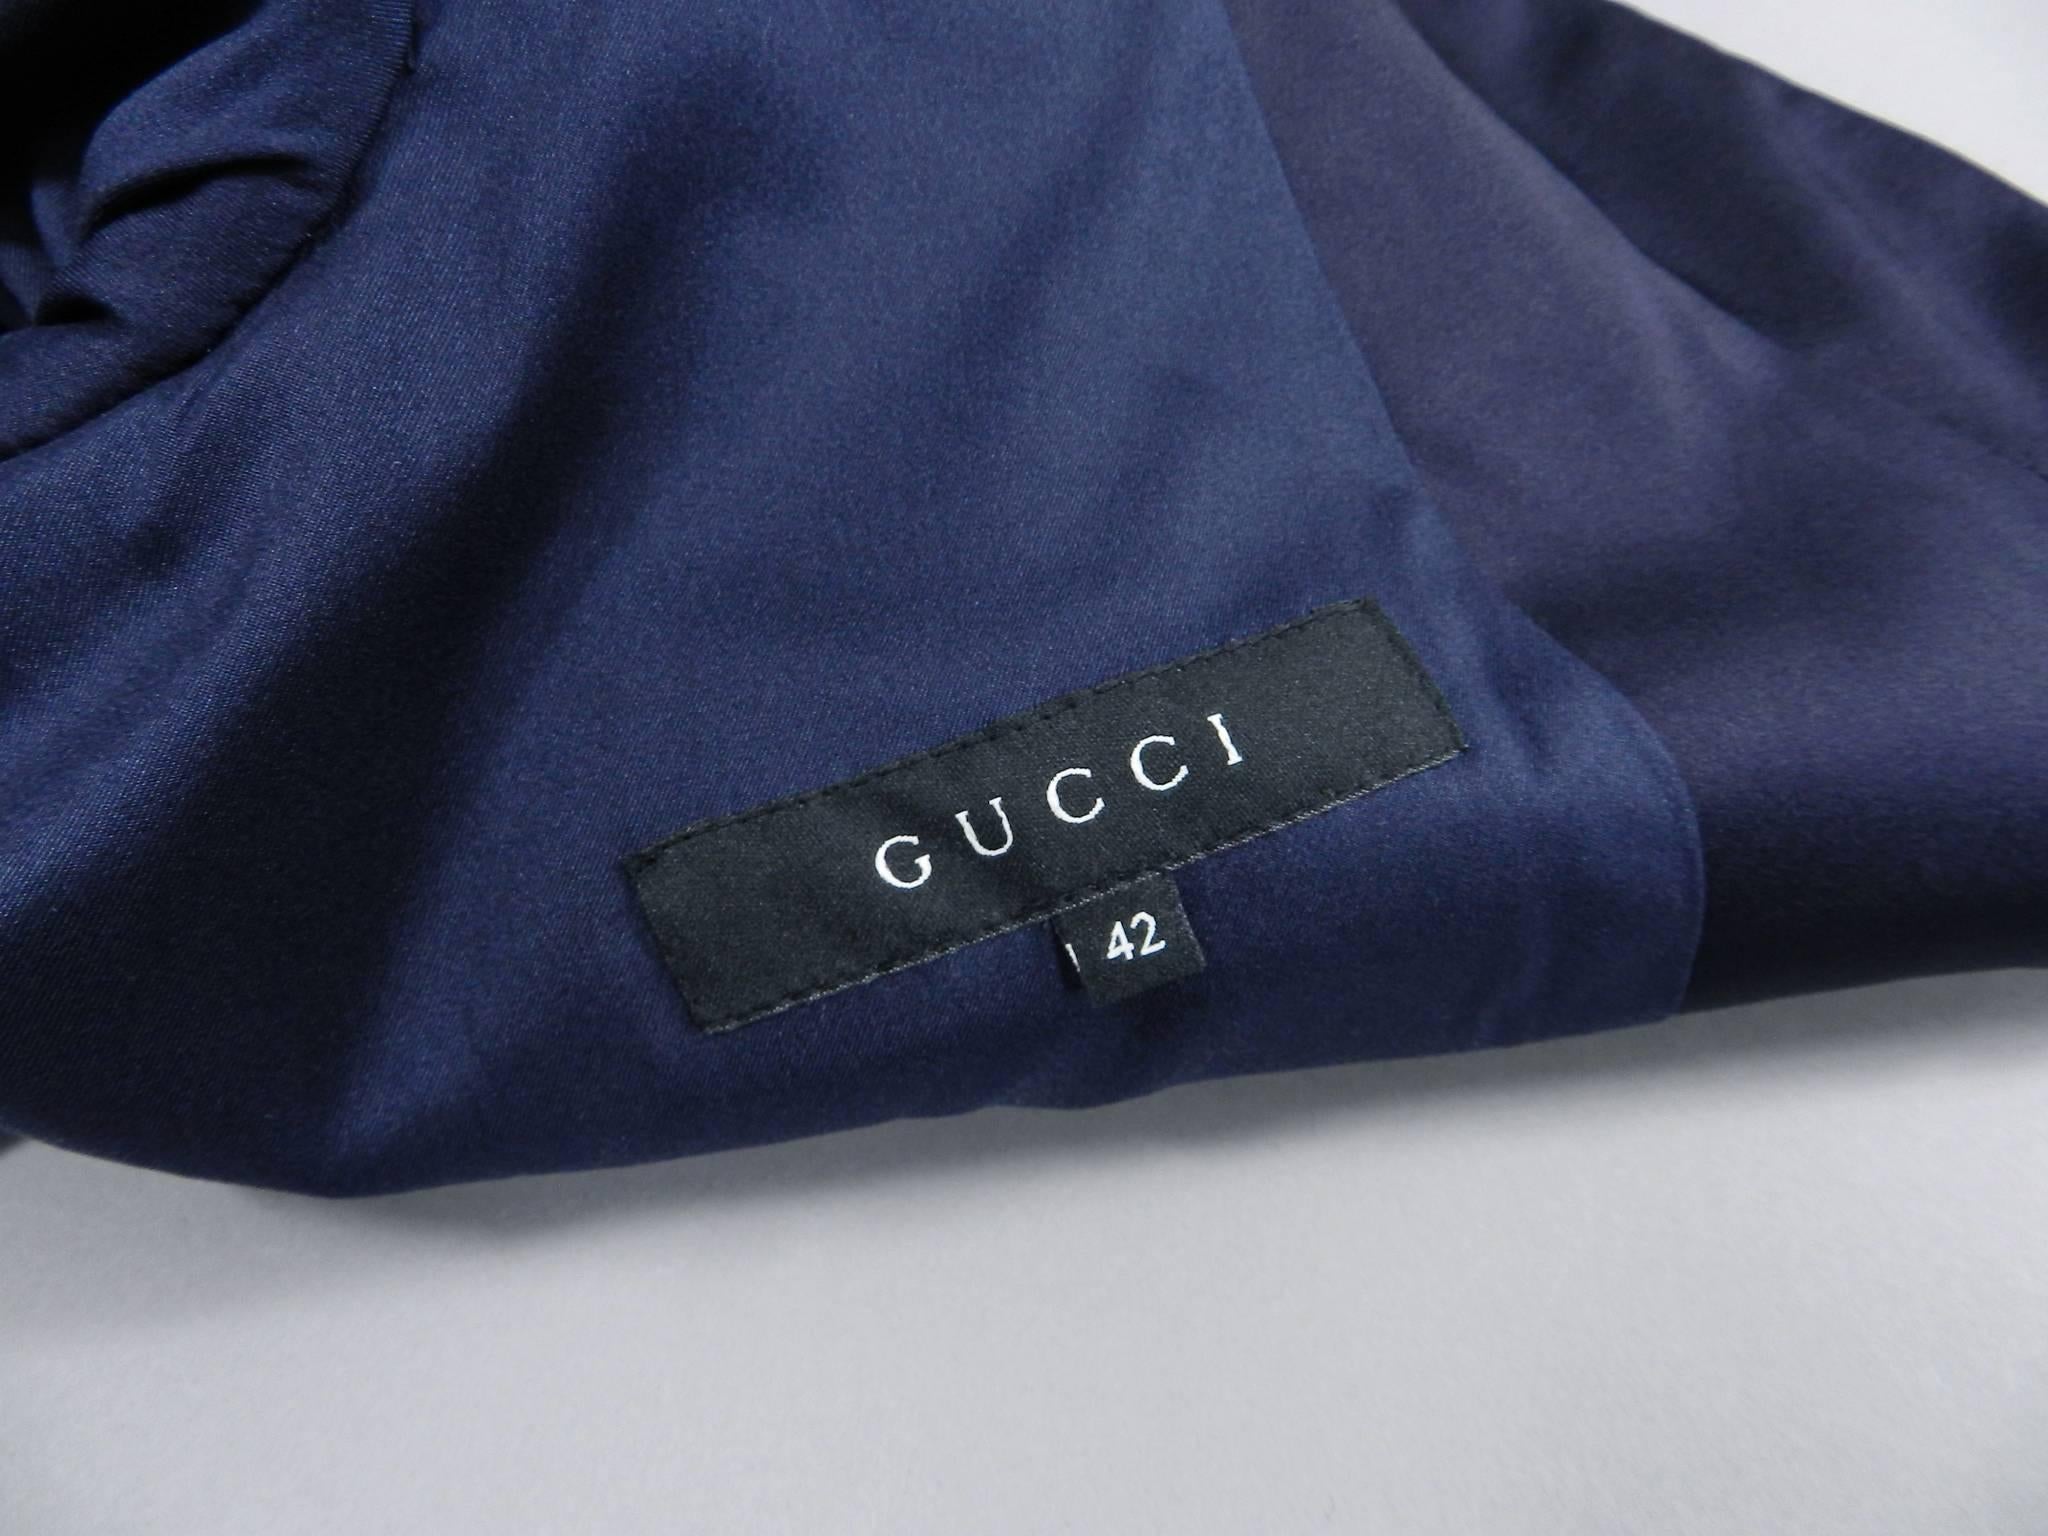 Black Gucci Midnight Navy Blue Velvet Blazer Jacket with Sash